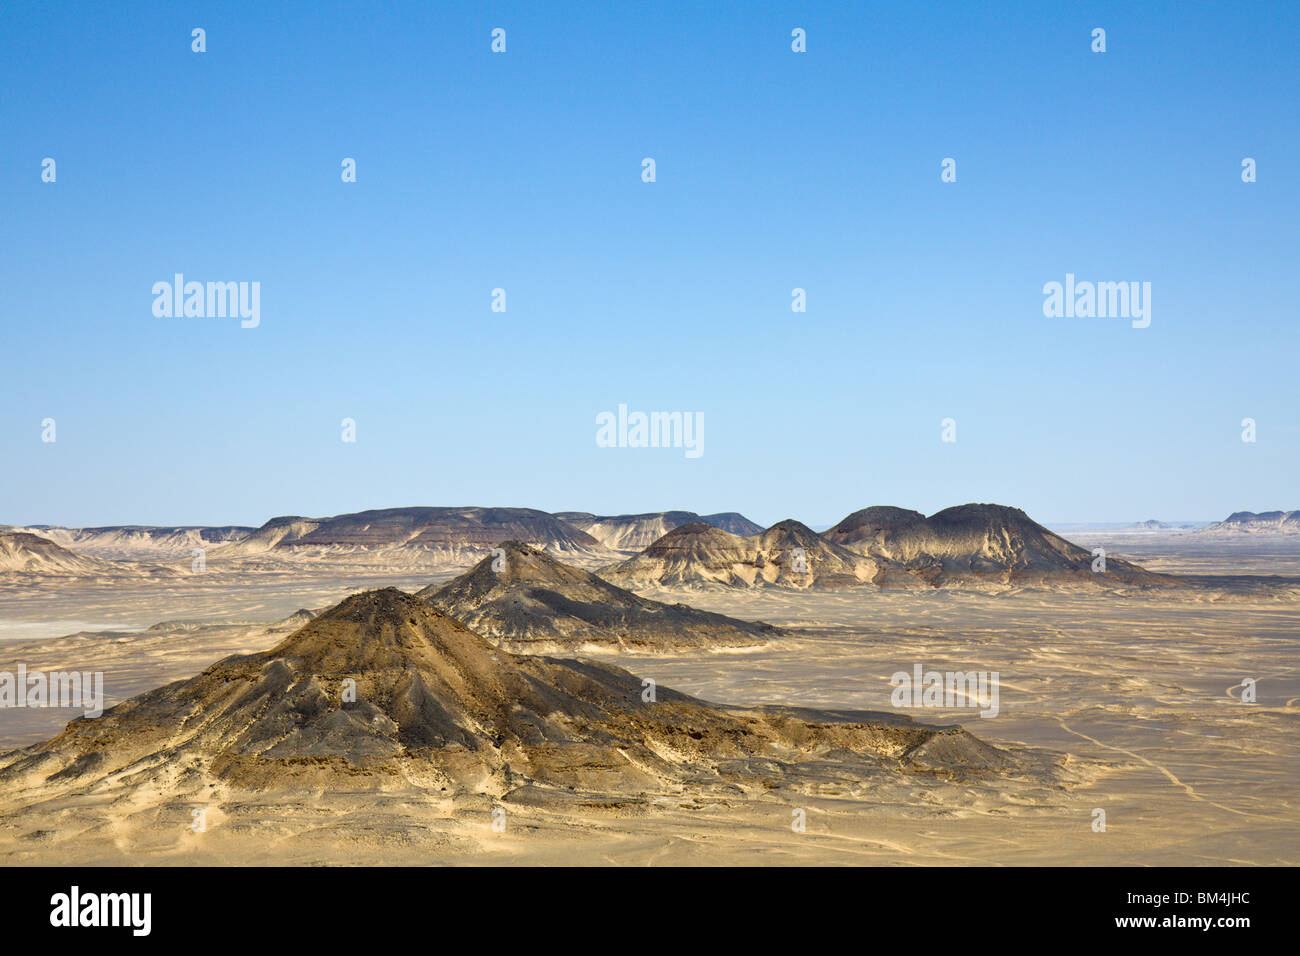 Nero, Deserto Deserto Libico, Egitto Foto Stock